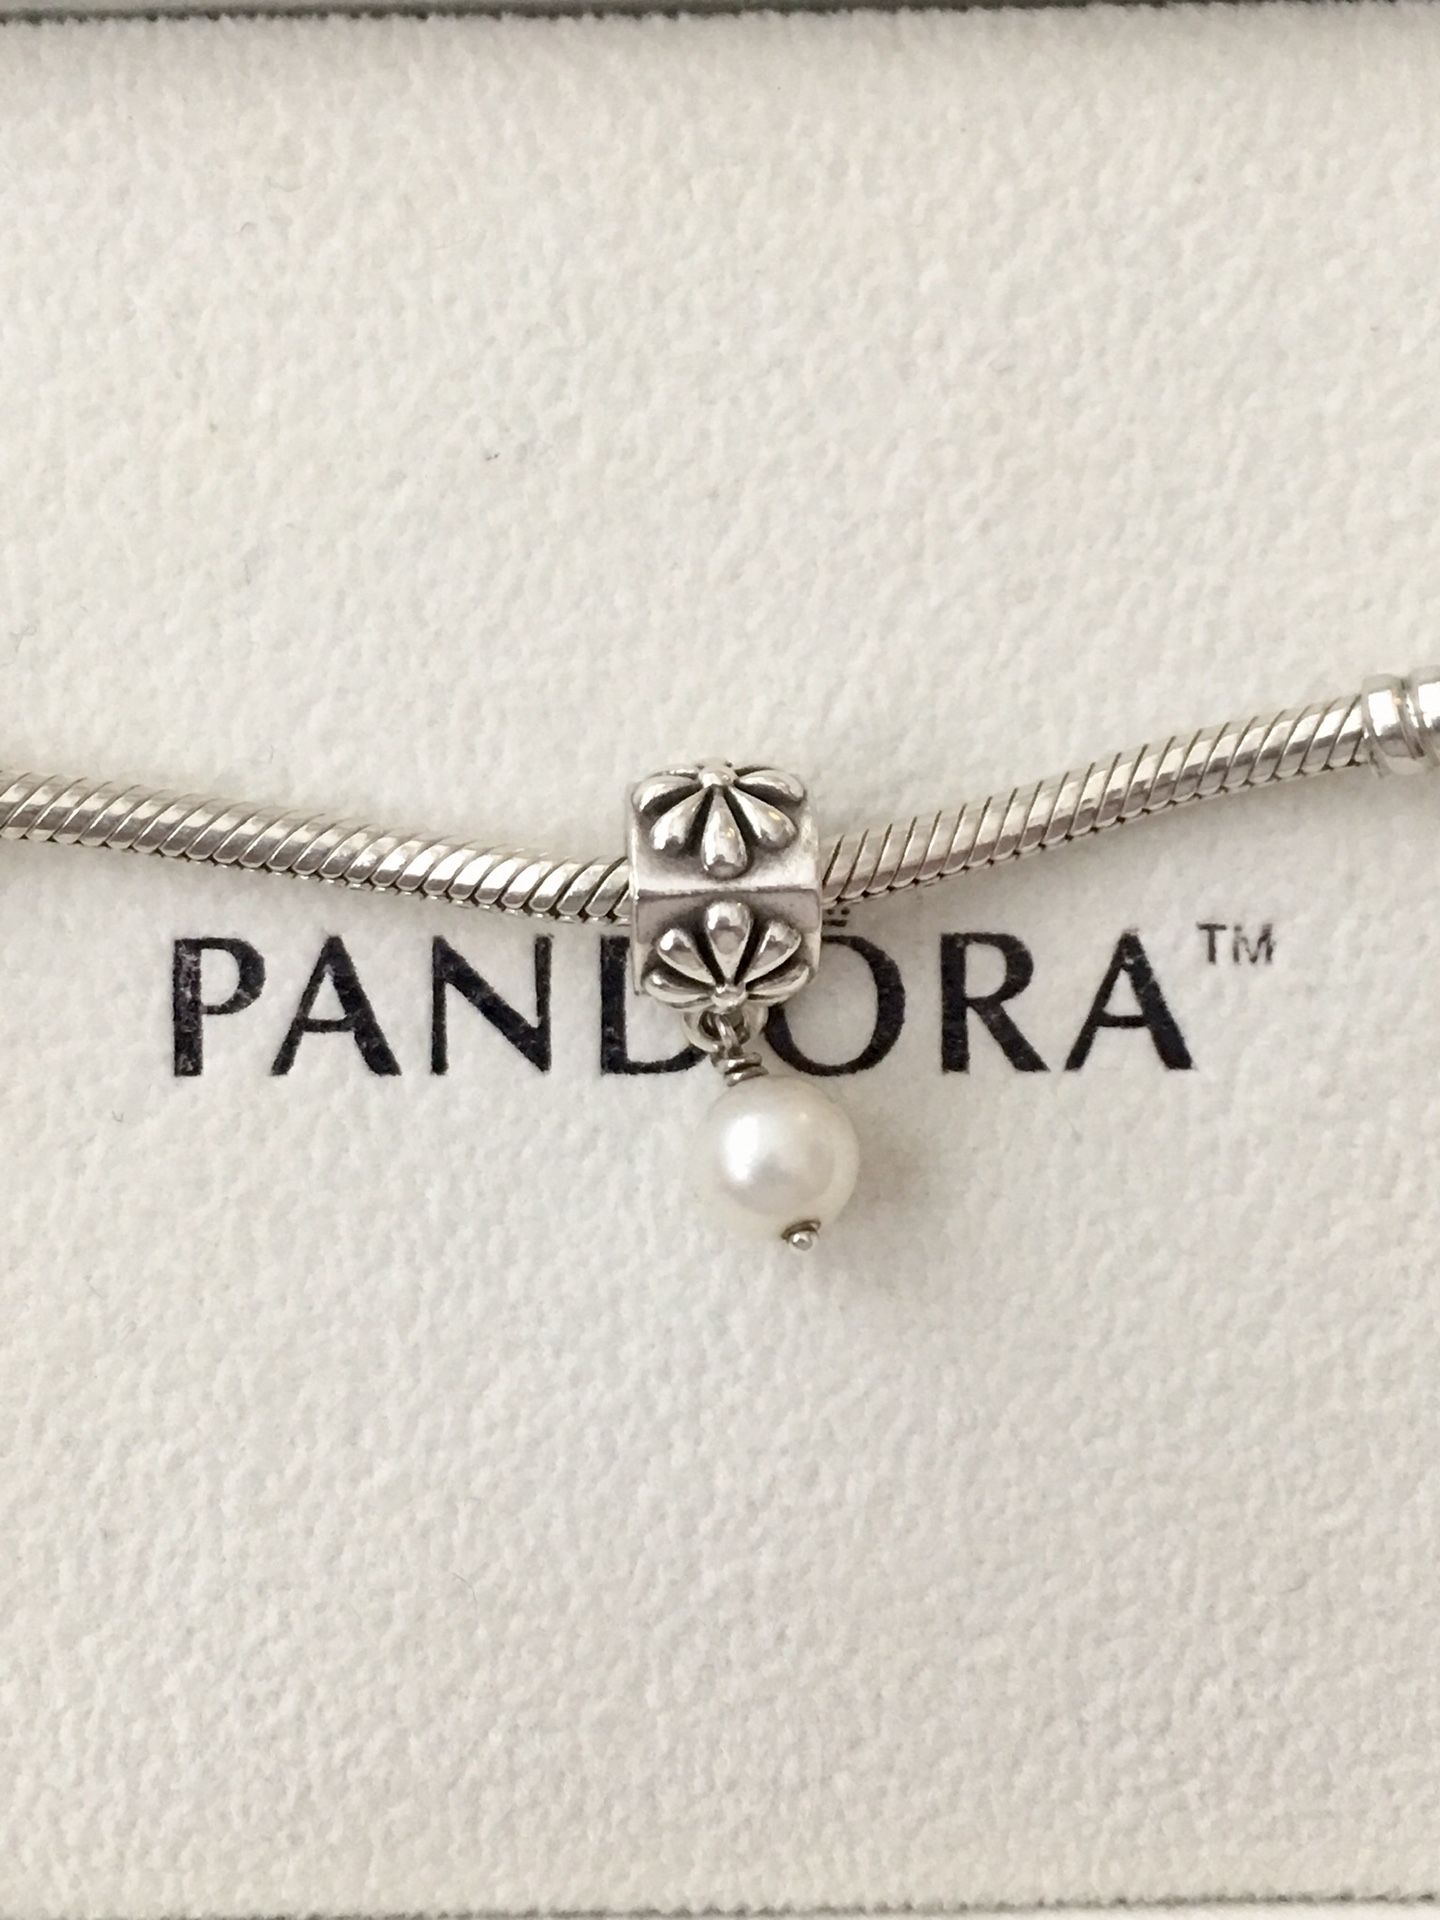 Pandora pearl charm